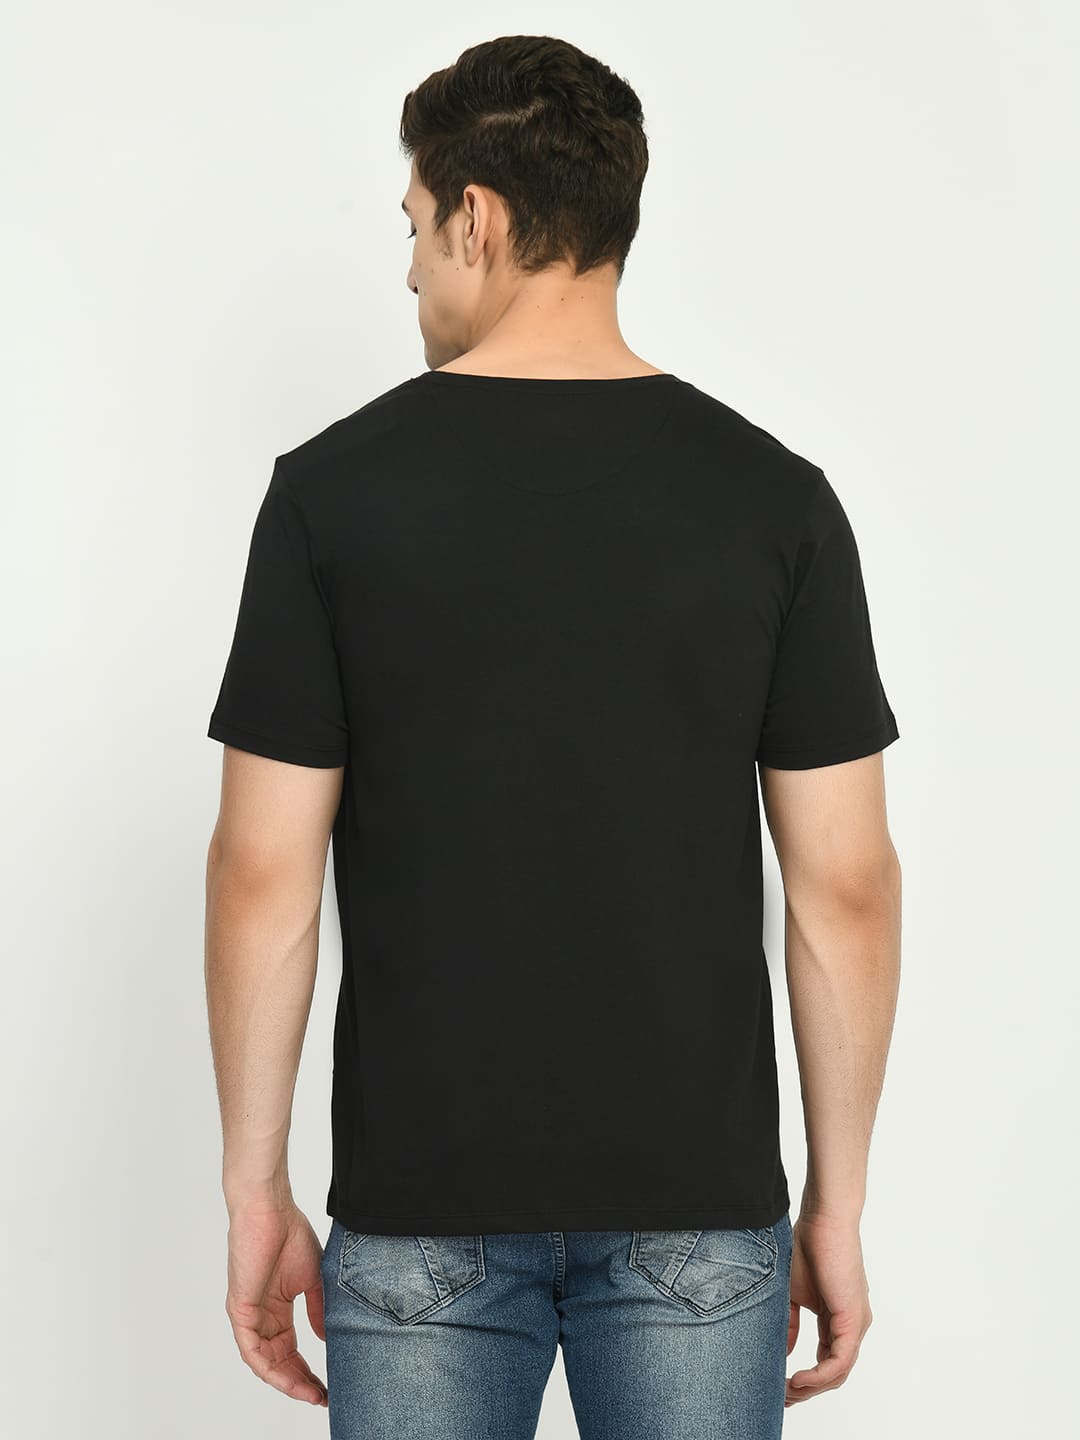 Men's Black Solid Crew Neck T-Shirt